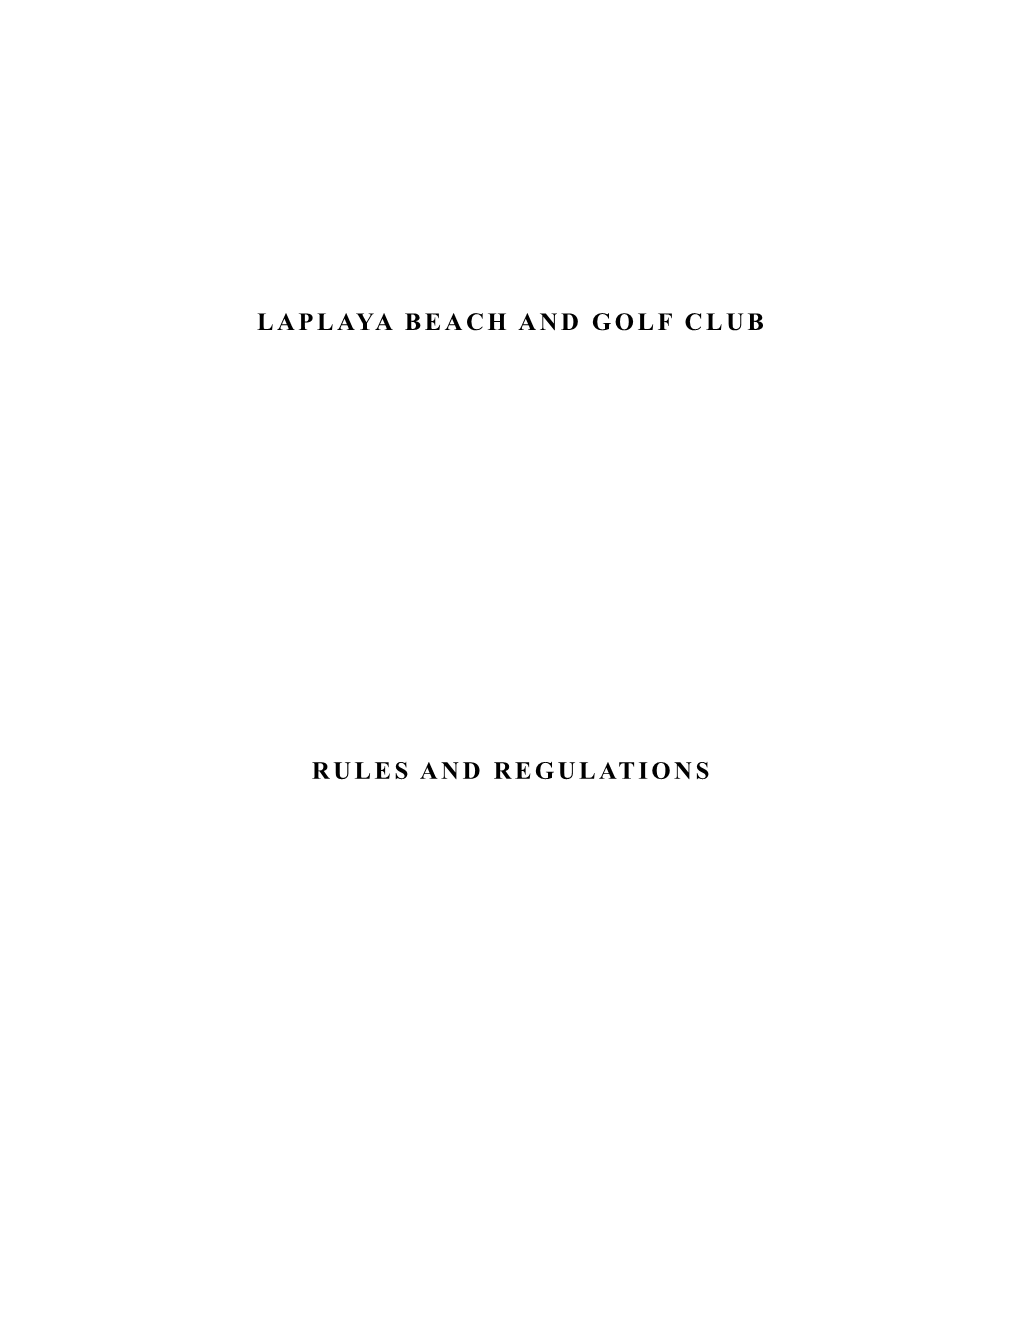 Laplaya Beach and Golf Club